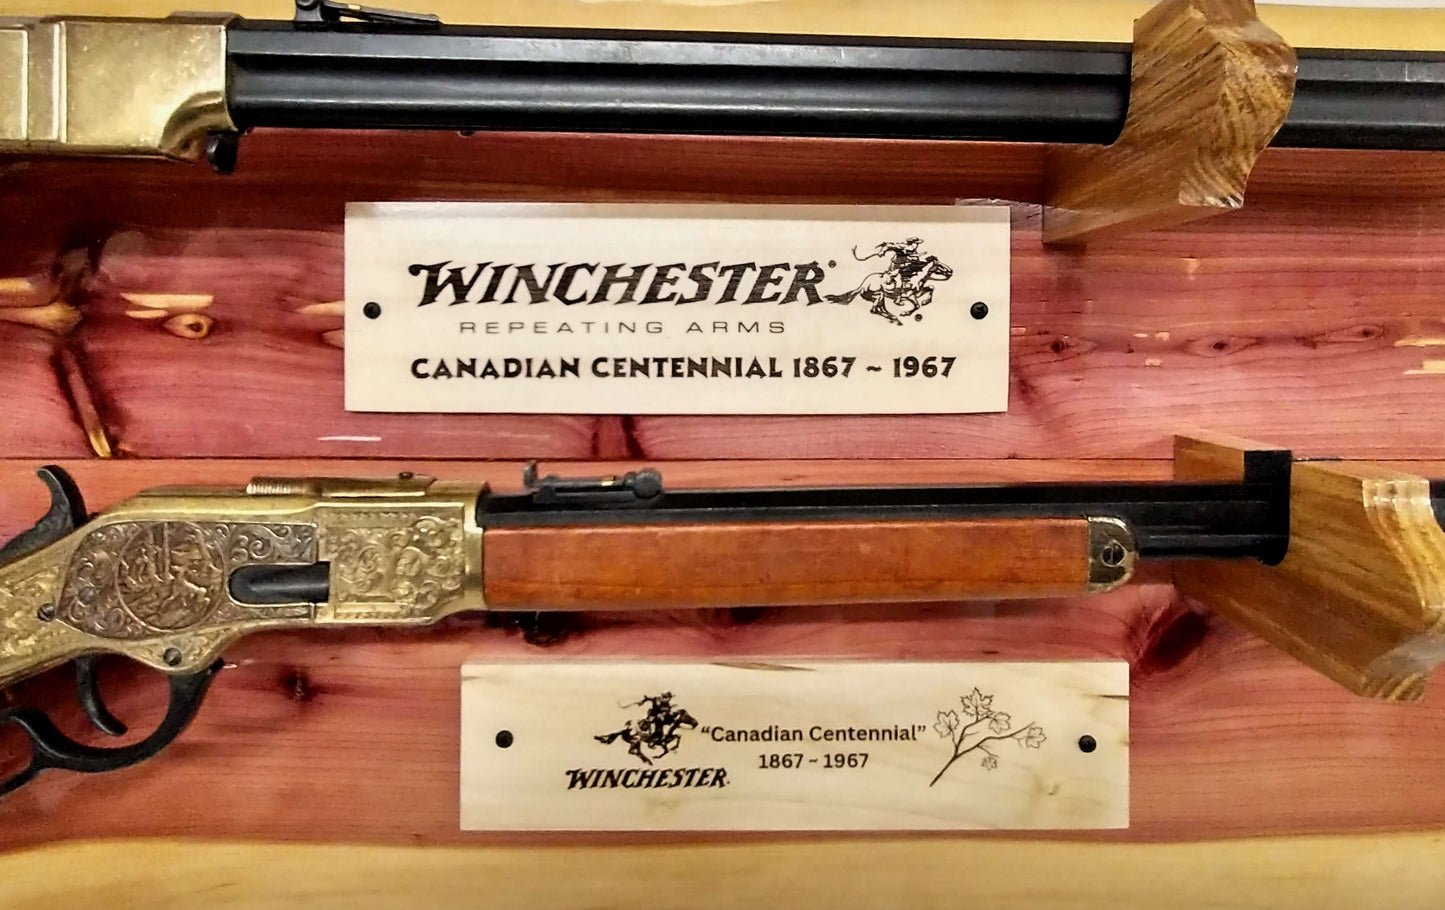 walkerwoodgifts Custom Designed 2 Place Gun Display, Live Edge Red Knotty Cedar